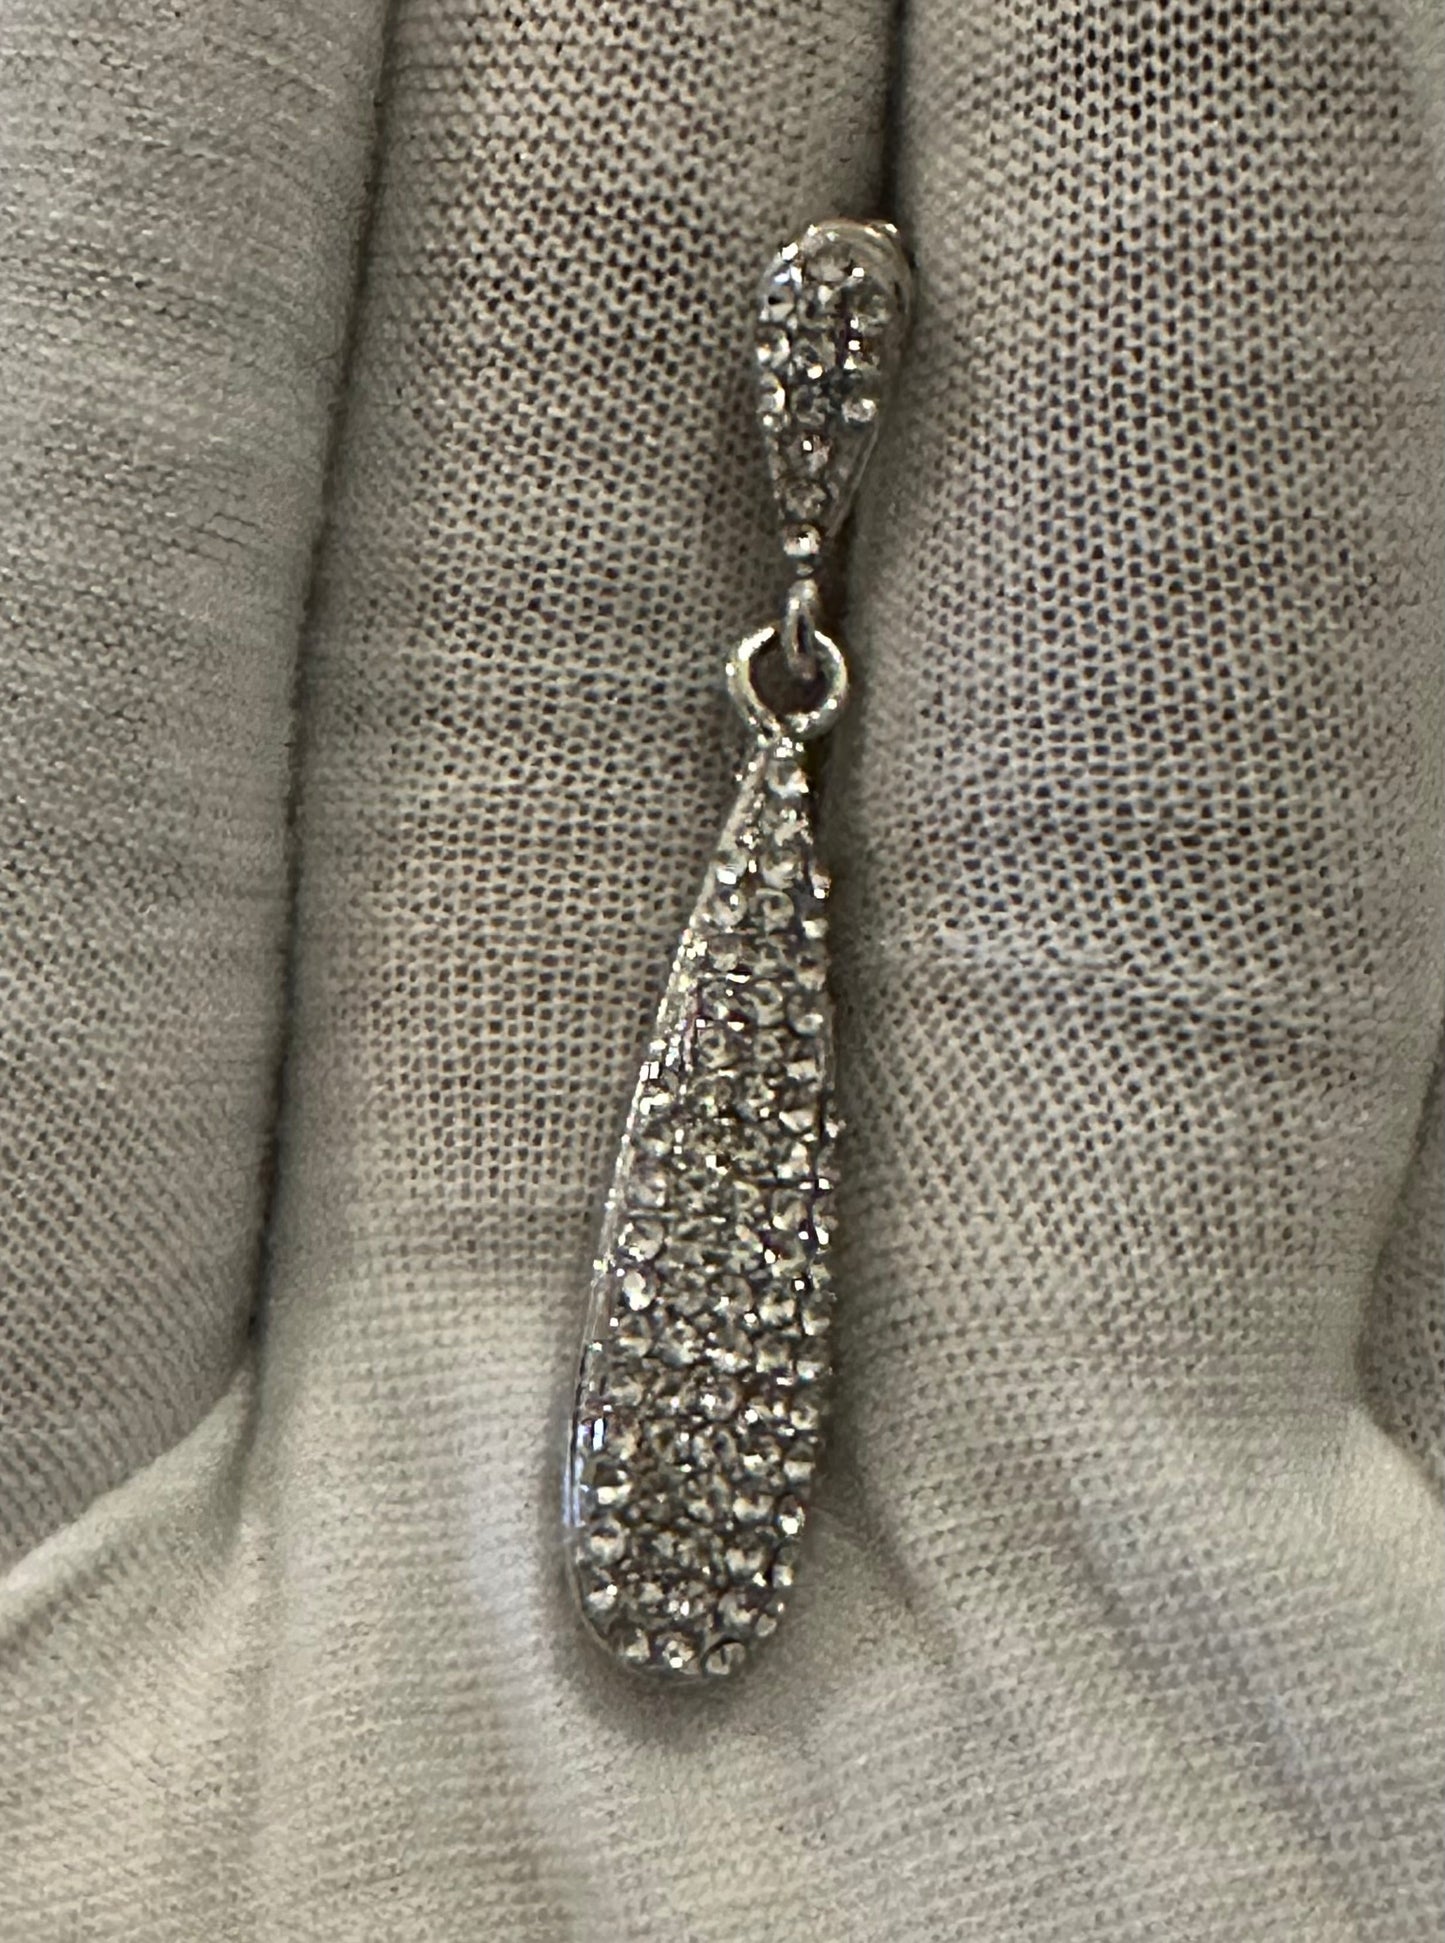 Silver Pave Drop Earrings